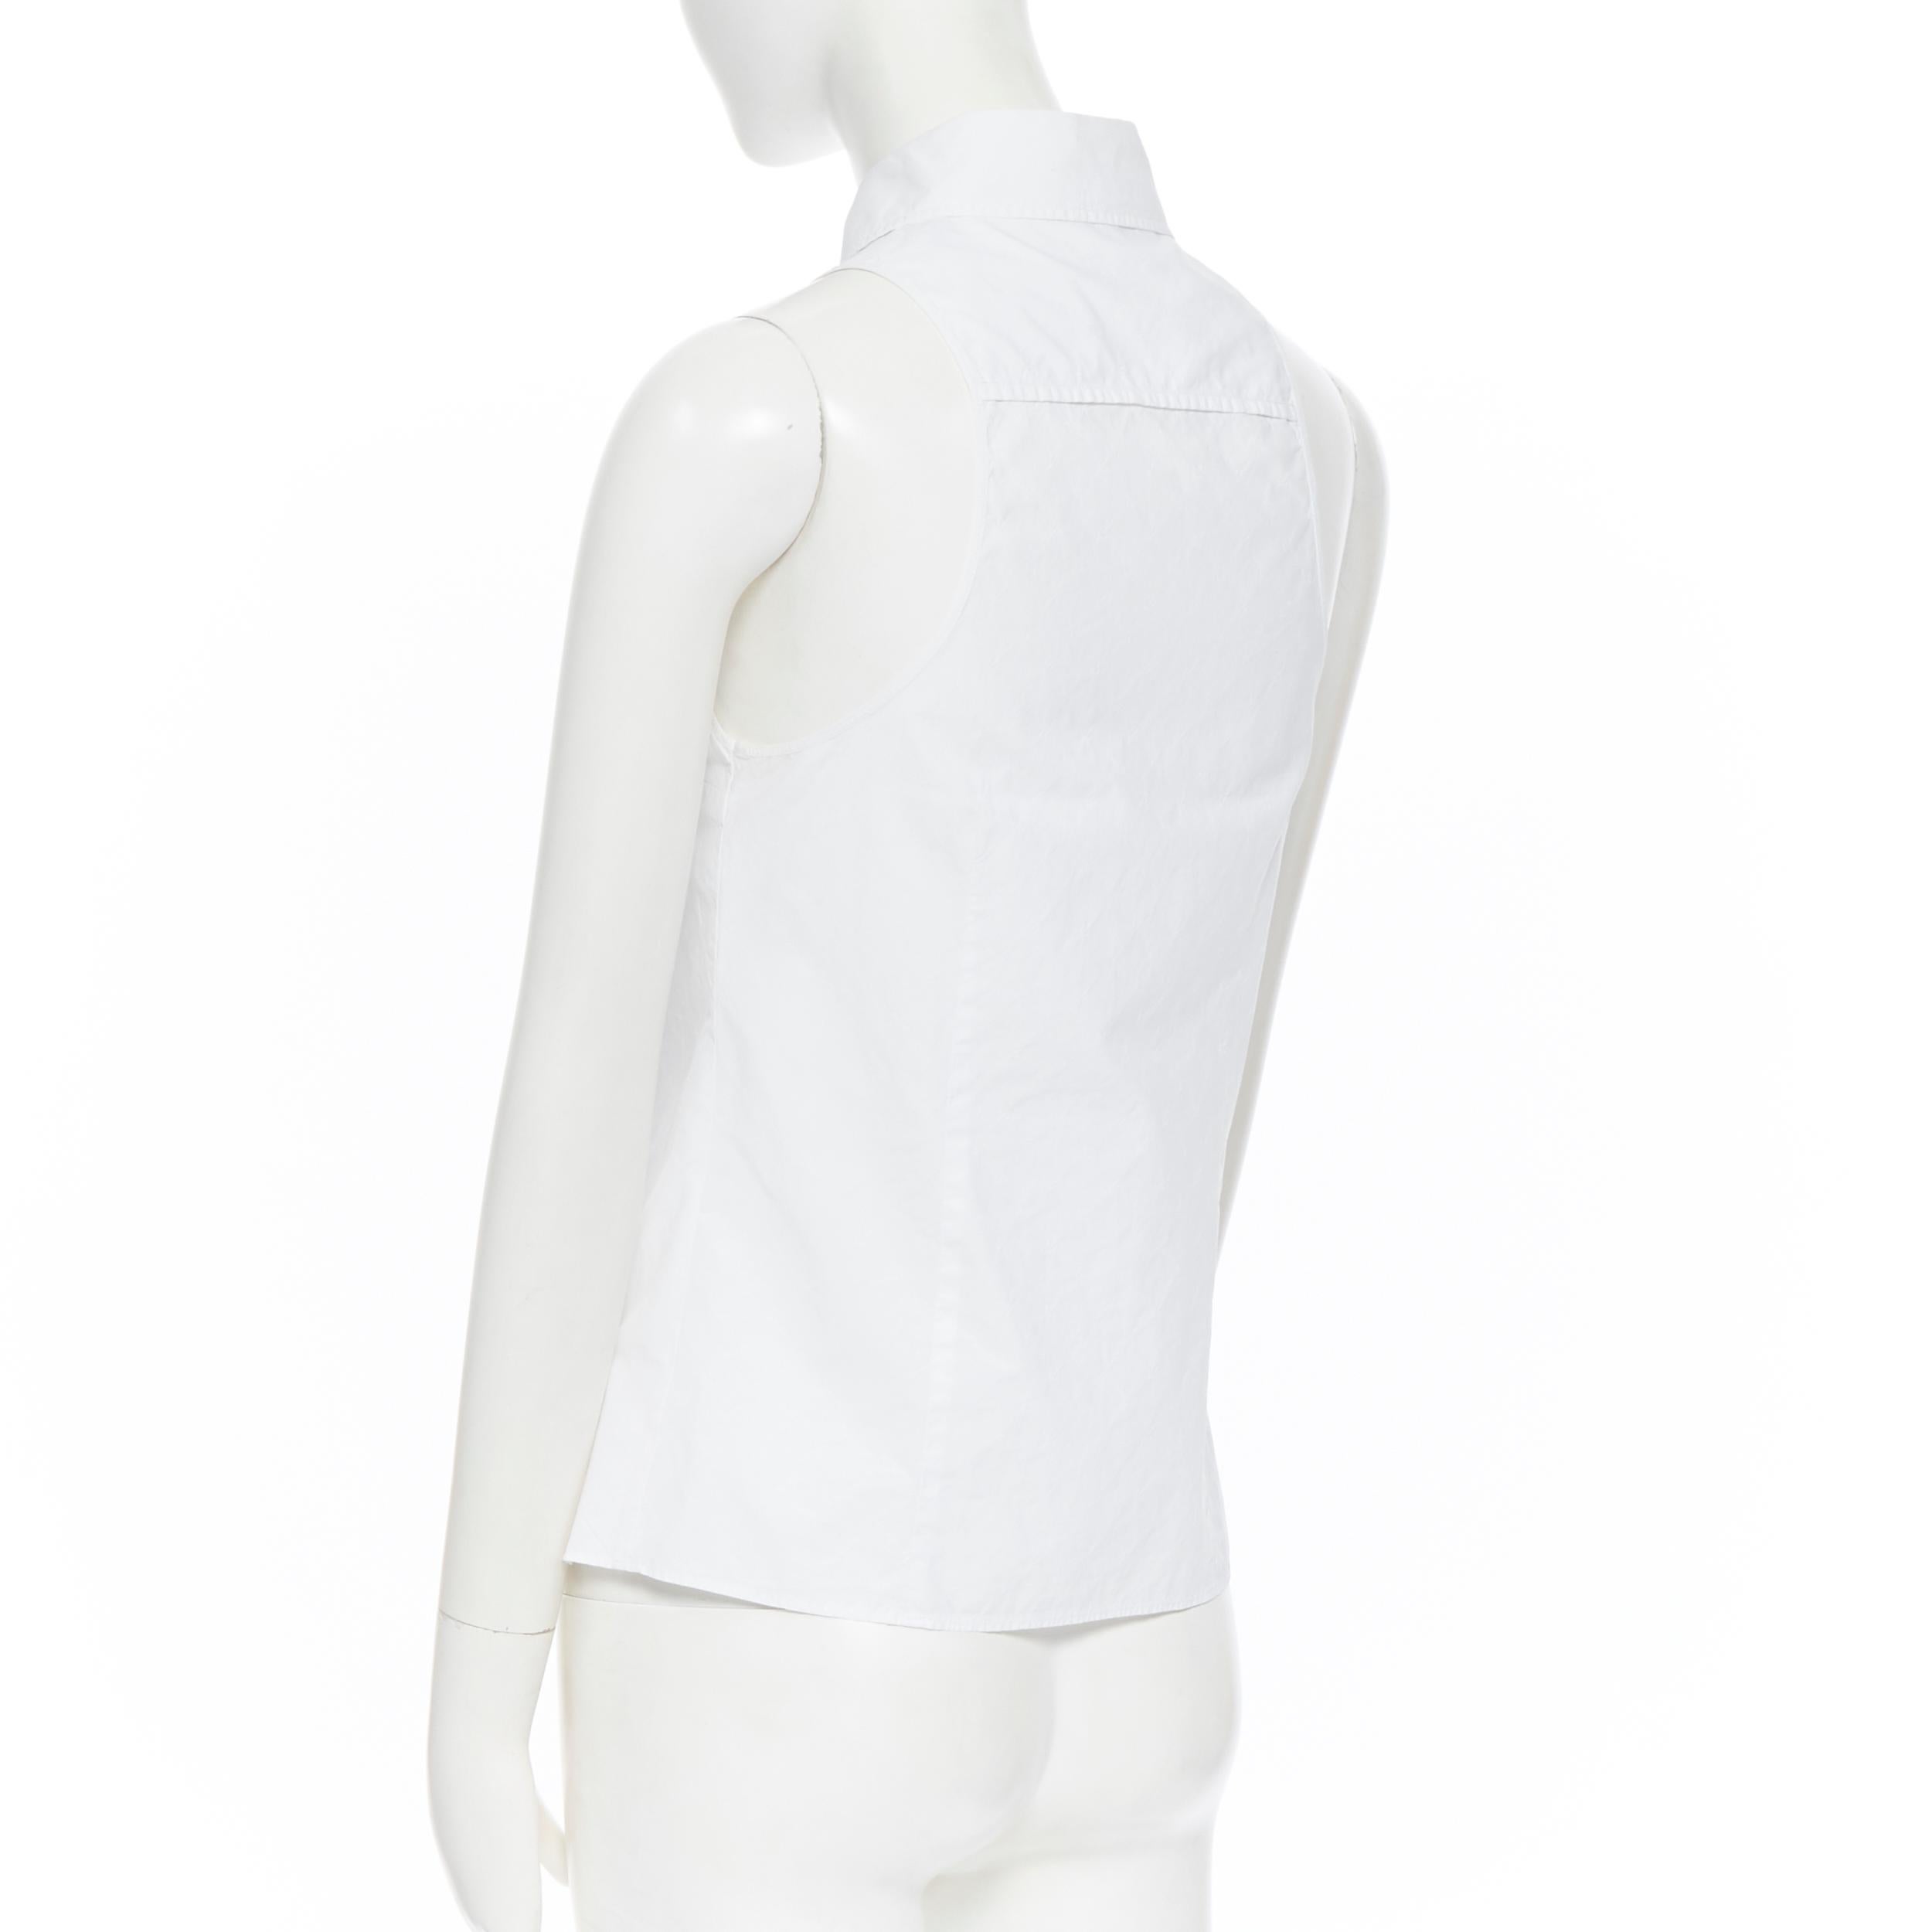 JIL SANDER NAVY white cotton sailor anchor embroidered sleeveless shirt  FR34 XS 3